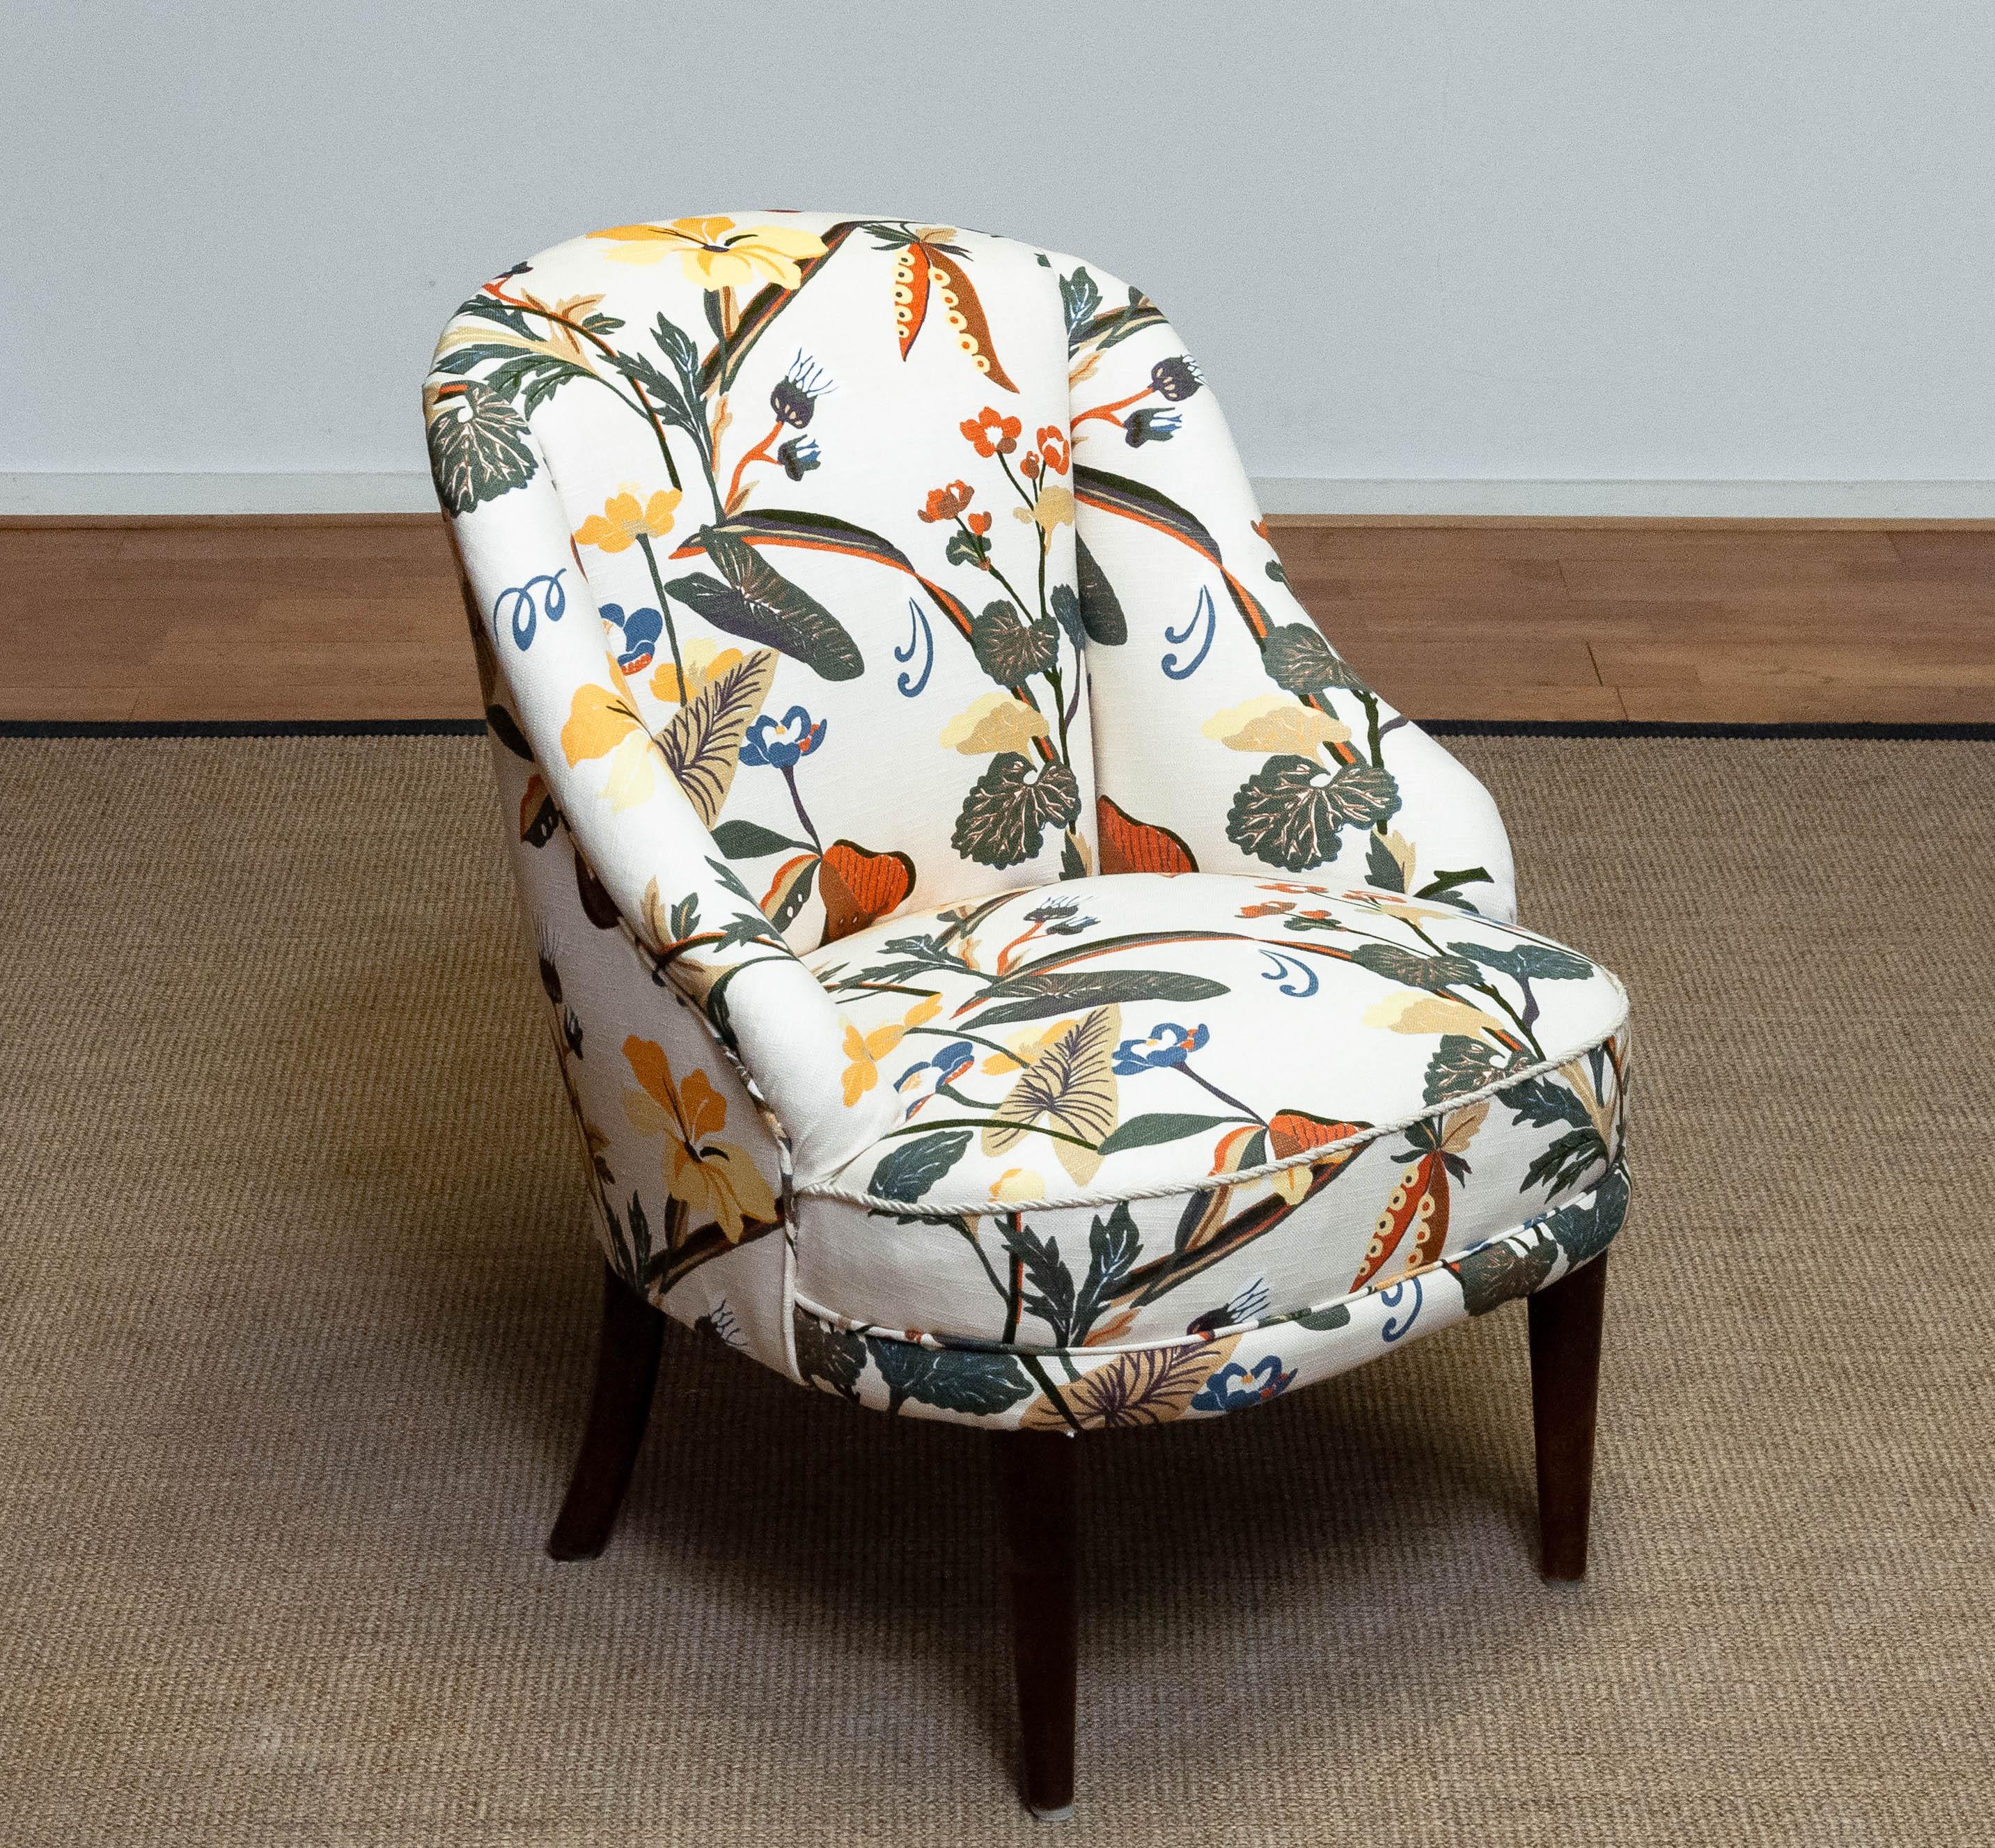 1940s Floral Printed Linen, J. Frank Style, New Upholstered Danish Slipper Chair For Sale 3